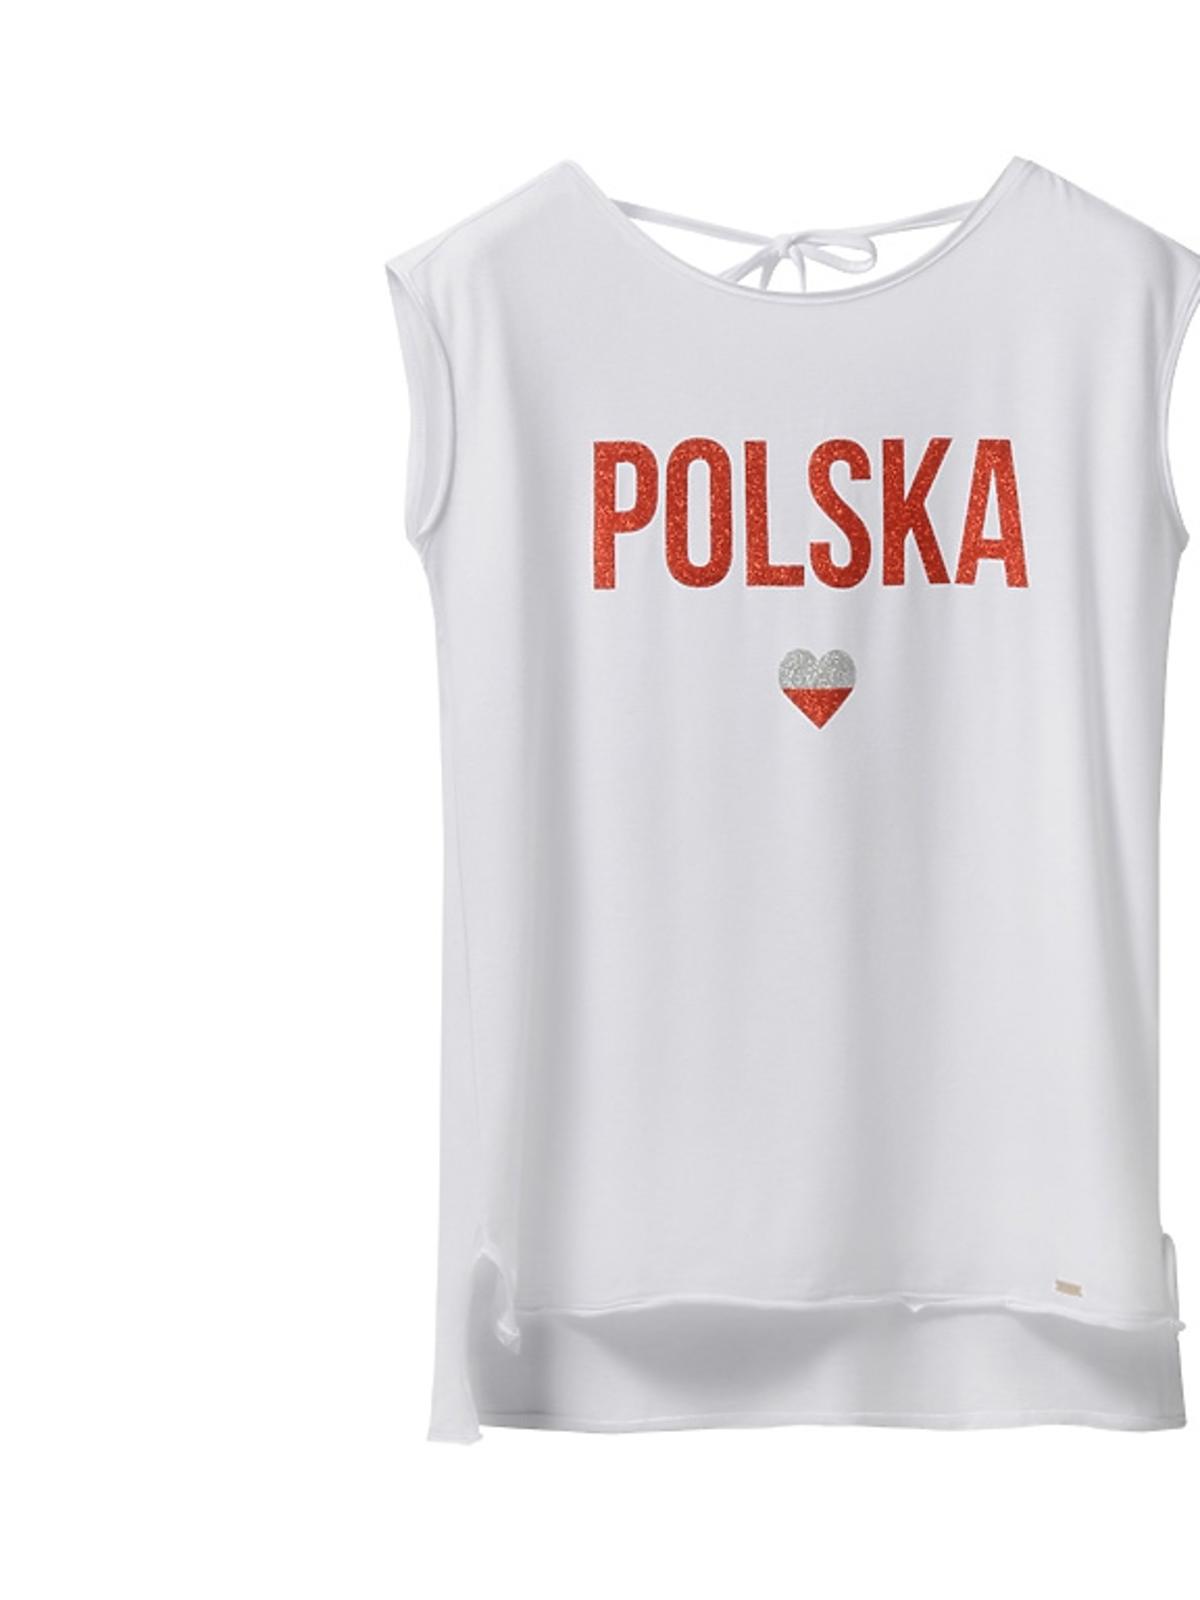 koszulka z napisem Polska marki Mohito